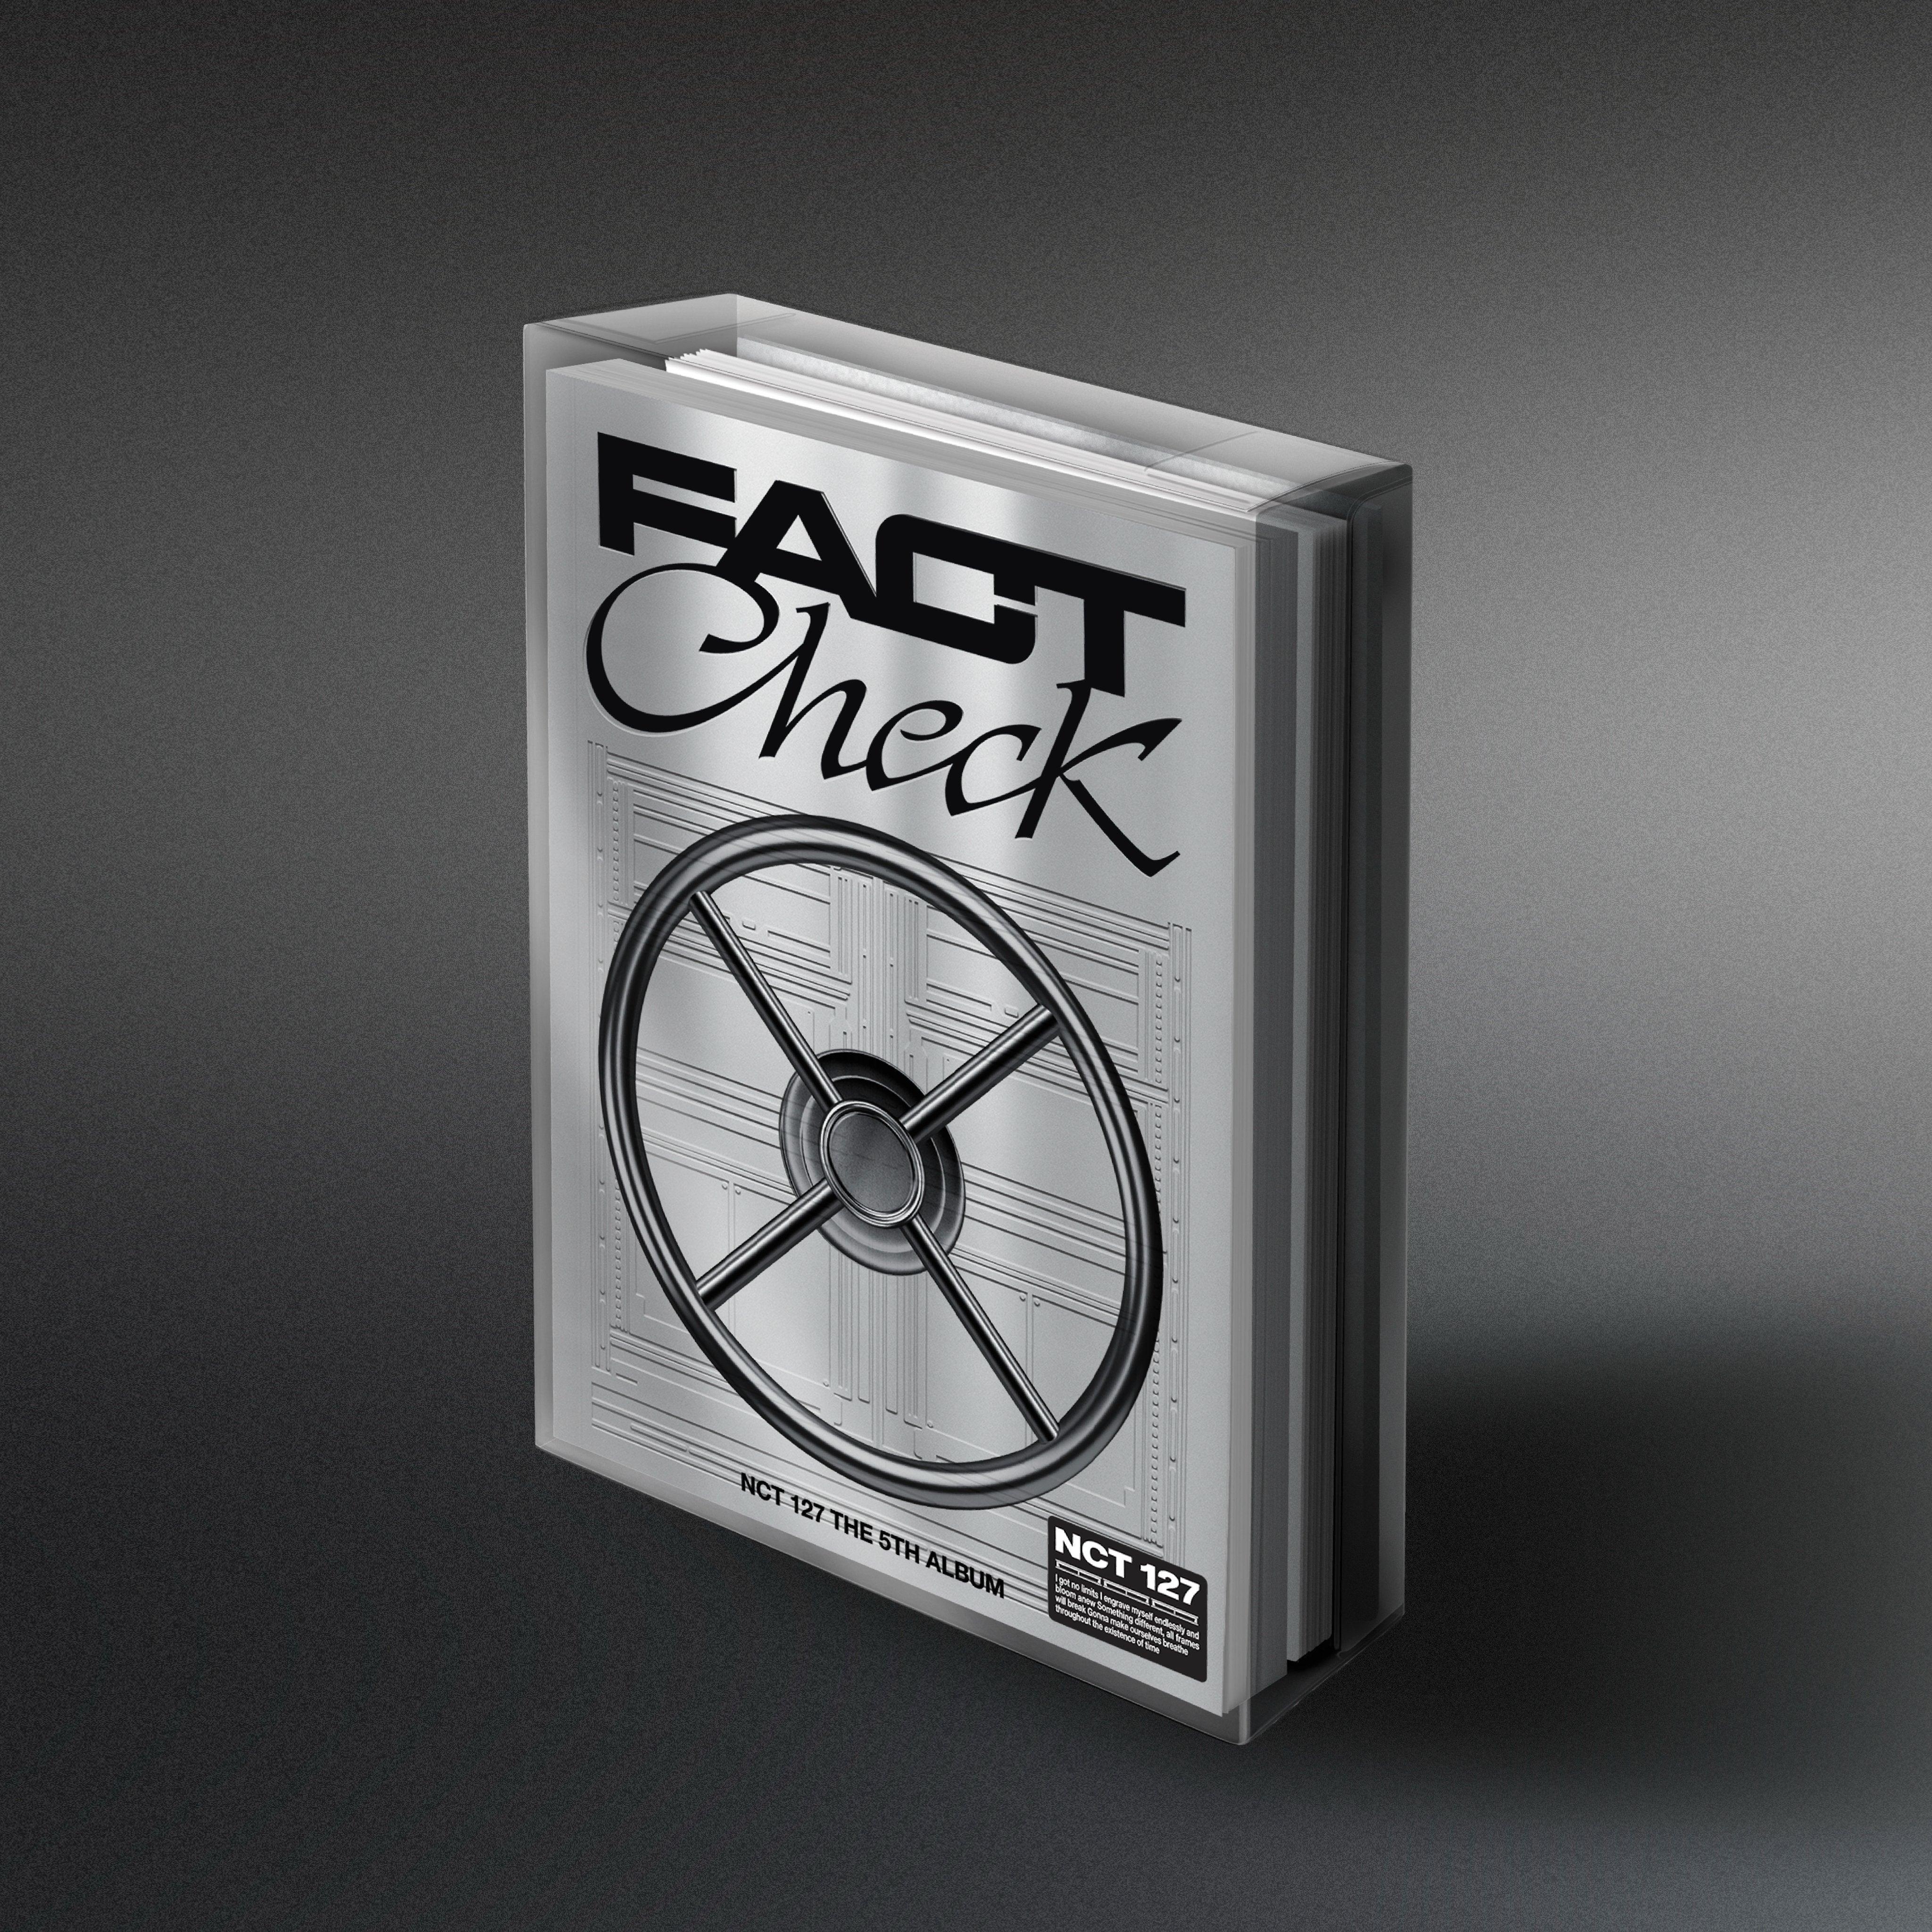 NCT 127 Album Vol. 5 – Fact Check (Storage Ver.) - KKANG